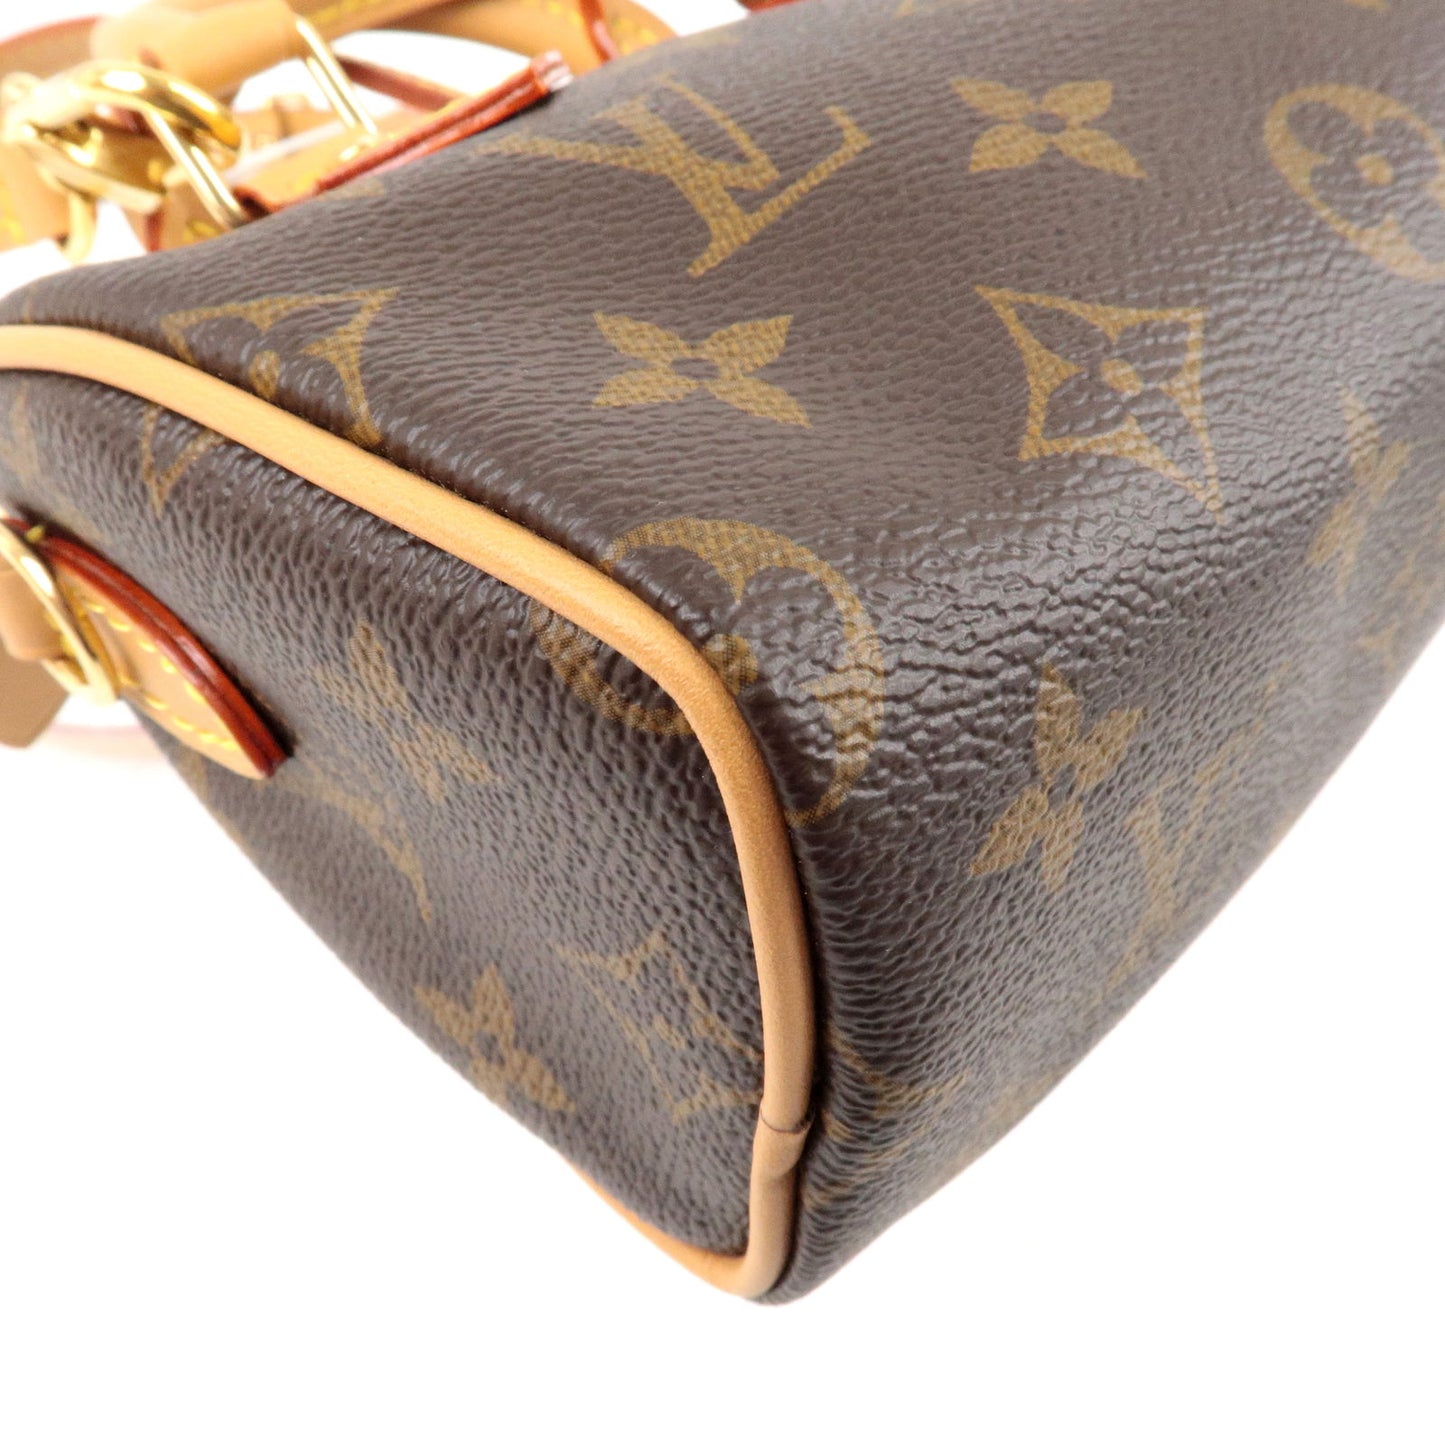 Louis Vuitton Speedy Handbag 385581